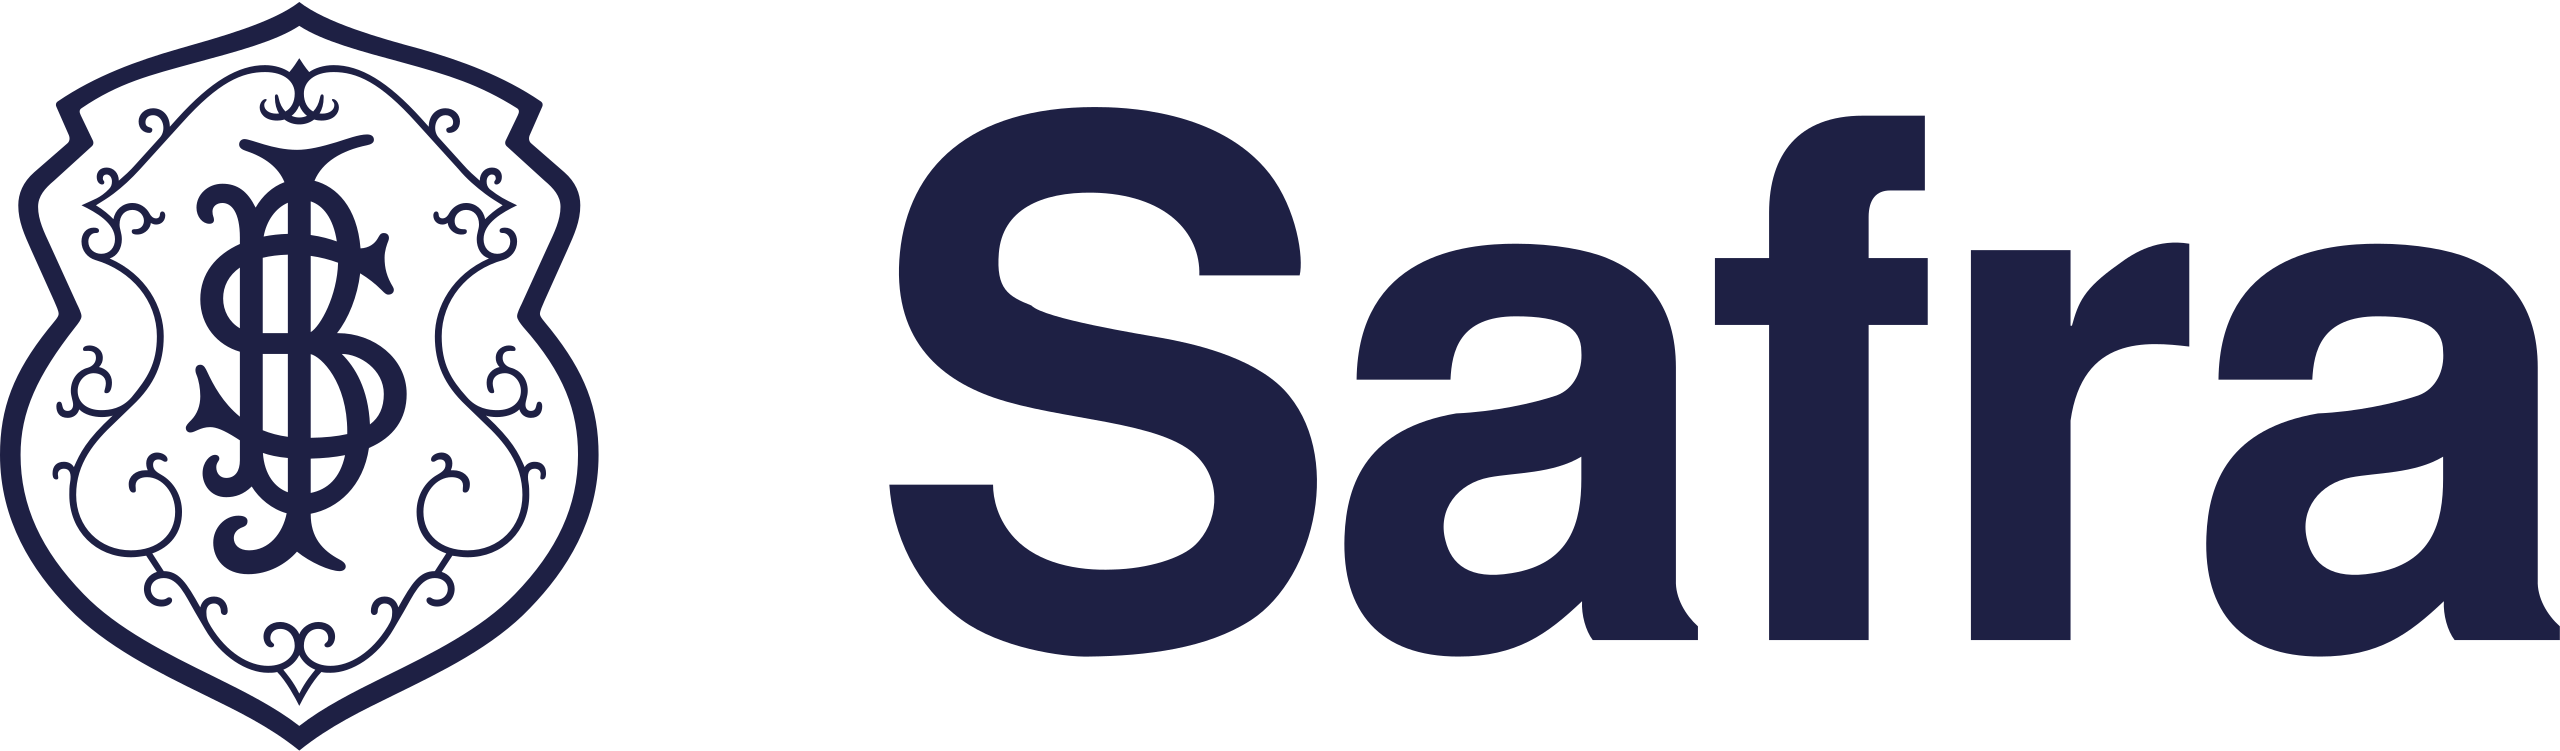 2560px-Grupo_Safra_logo.svg